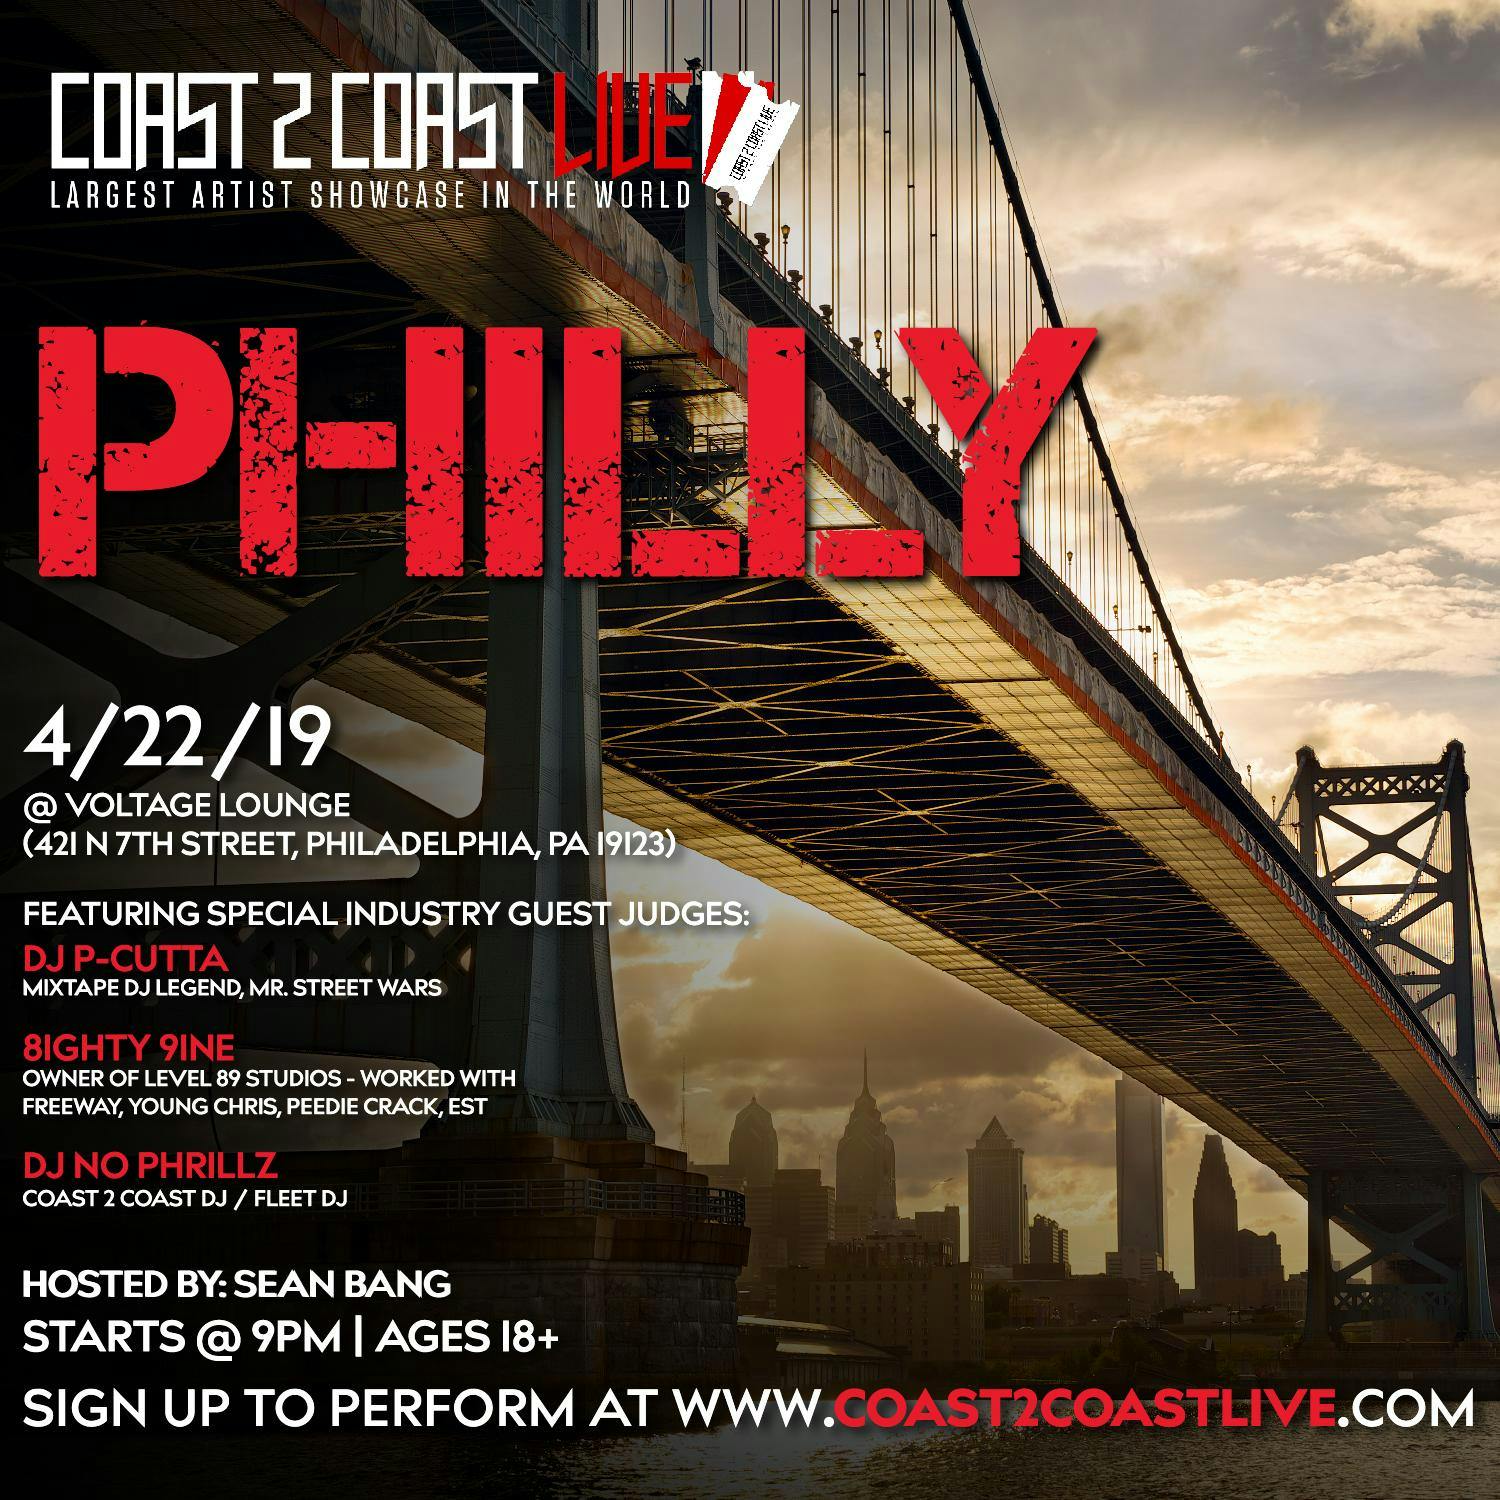 Coast 2 Coast LIVE Artist Showcase Philadelphia, PA - $50K Grand Prize